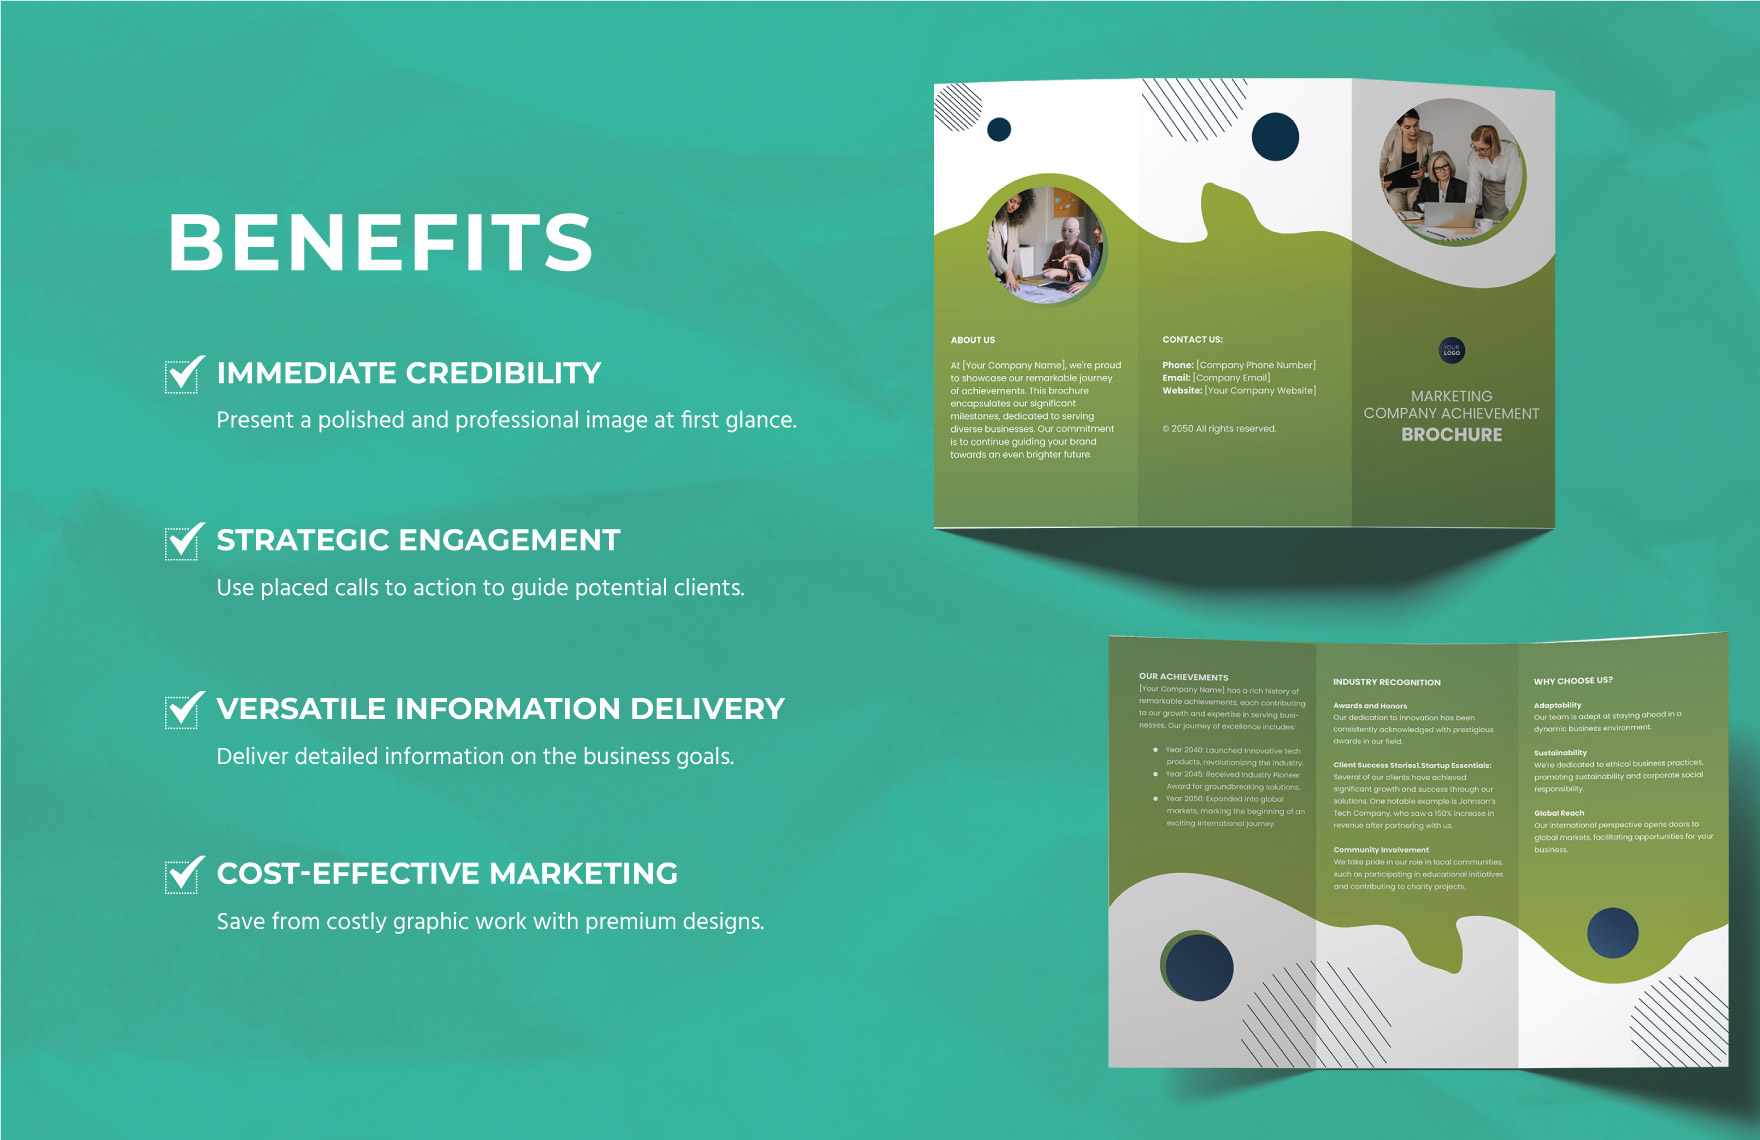 Marketing Company Achievements Brochure Template